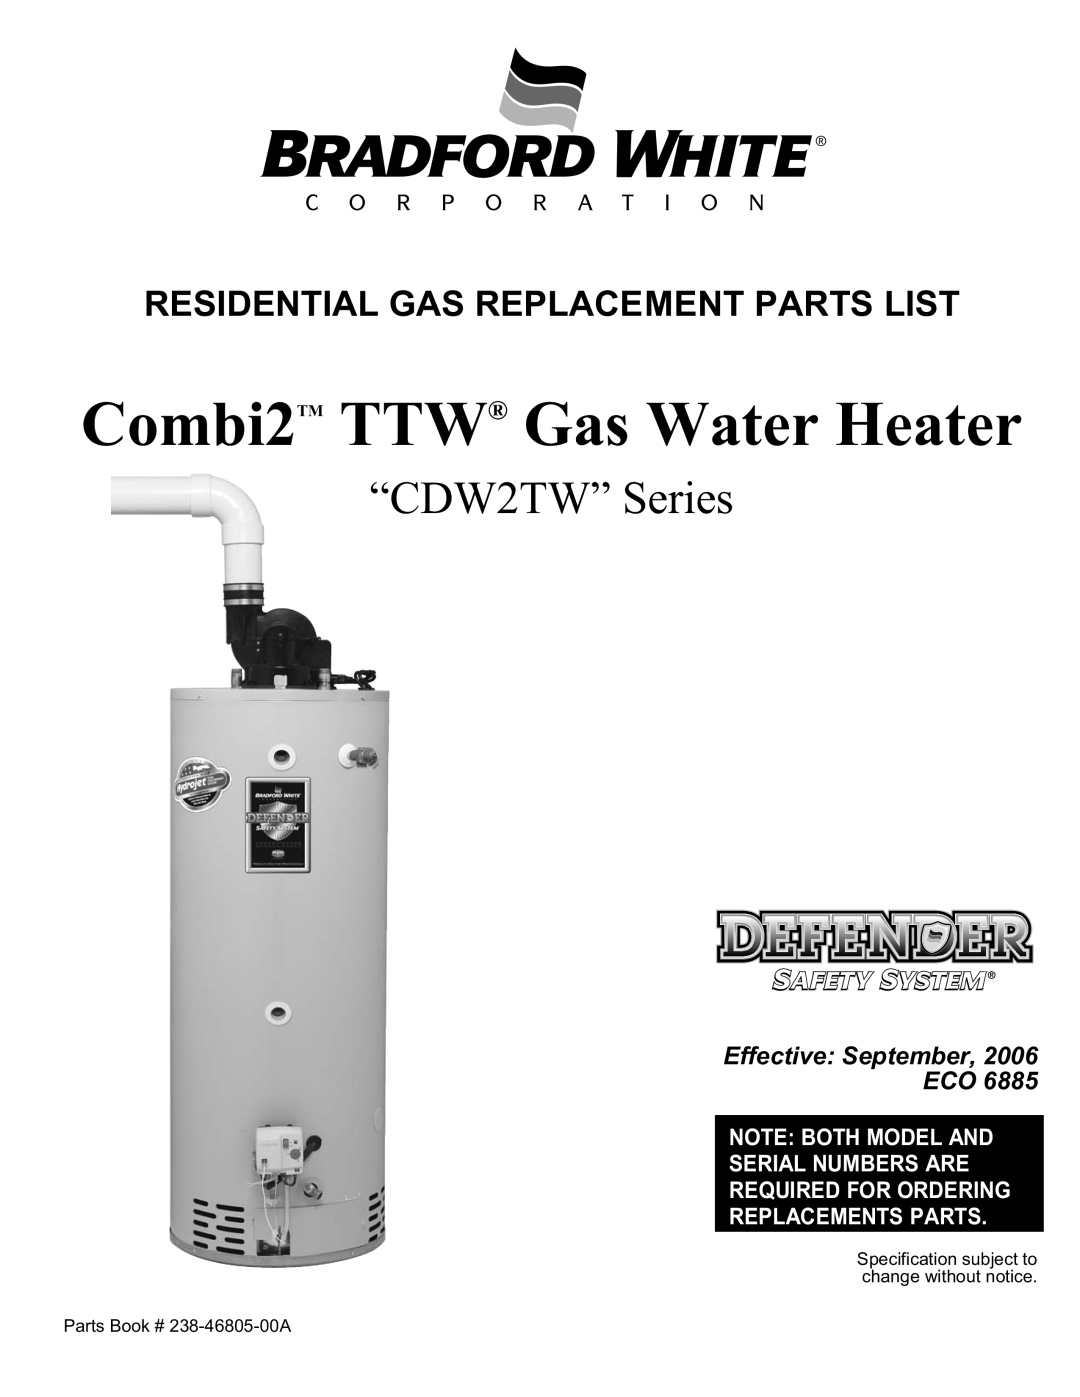 Bradford-White Corp CDW2TW Series specifications Combi2TM TTW Gas Water Heater, “CDW2TW” Series, Effective September ECO 